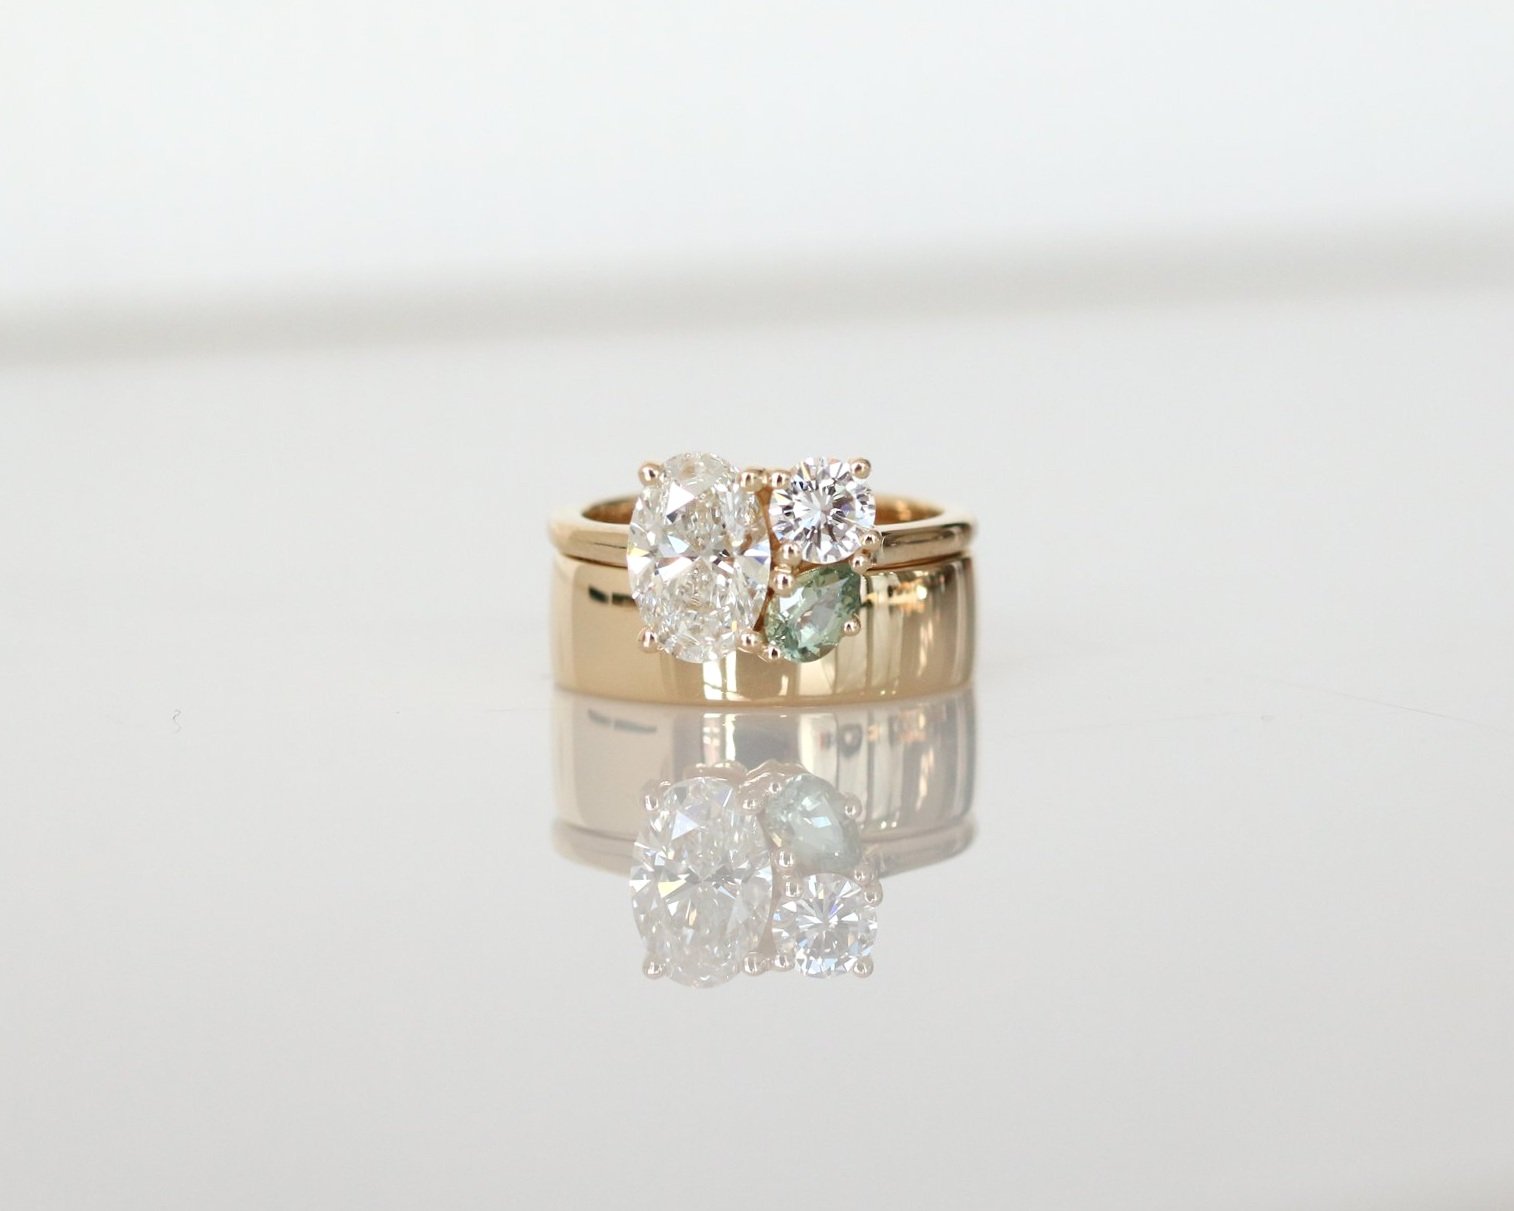 Glennie Wedding set - 1.2ct natural oval diamond + heirloom diamond + green Montana sapphire pear + 14k yellow gold